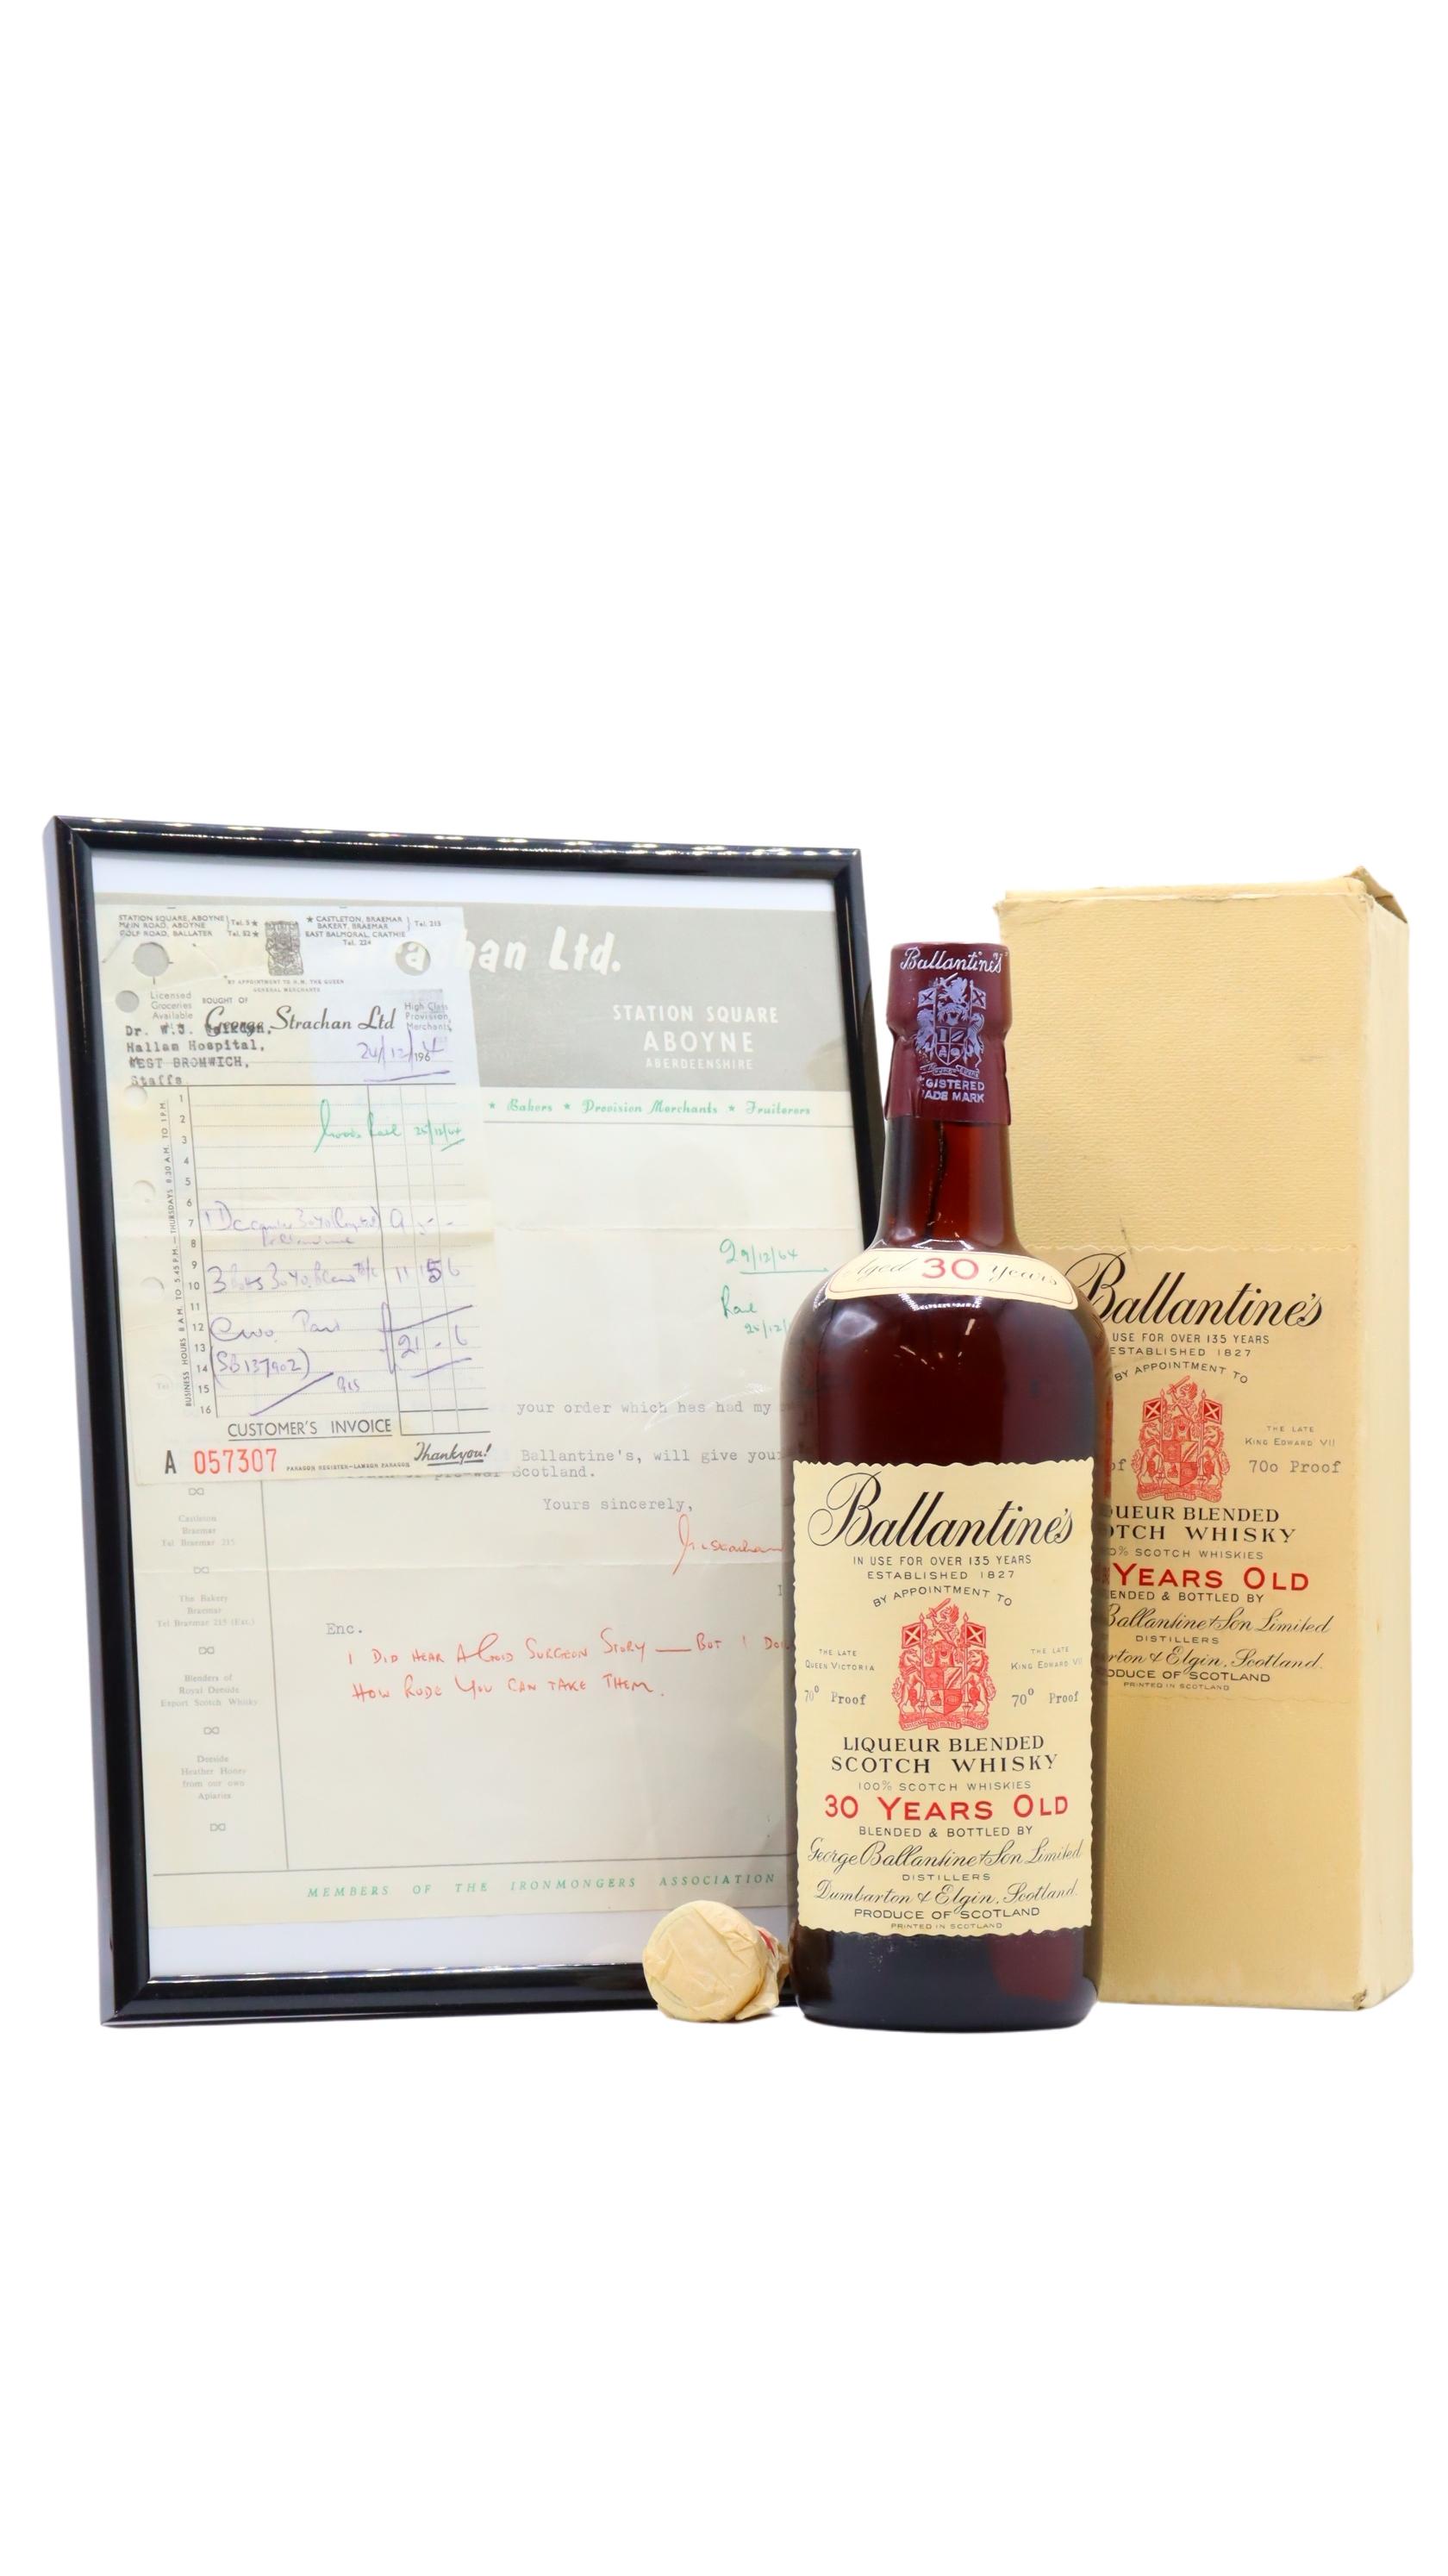 Ballantines 30 Year Blended Scotch